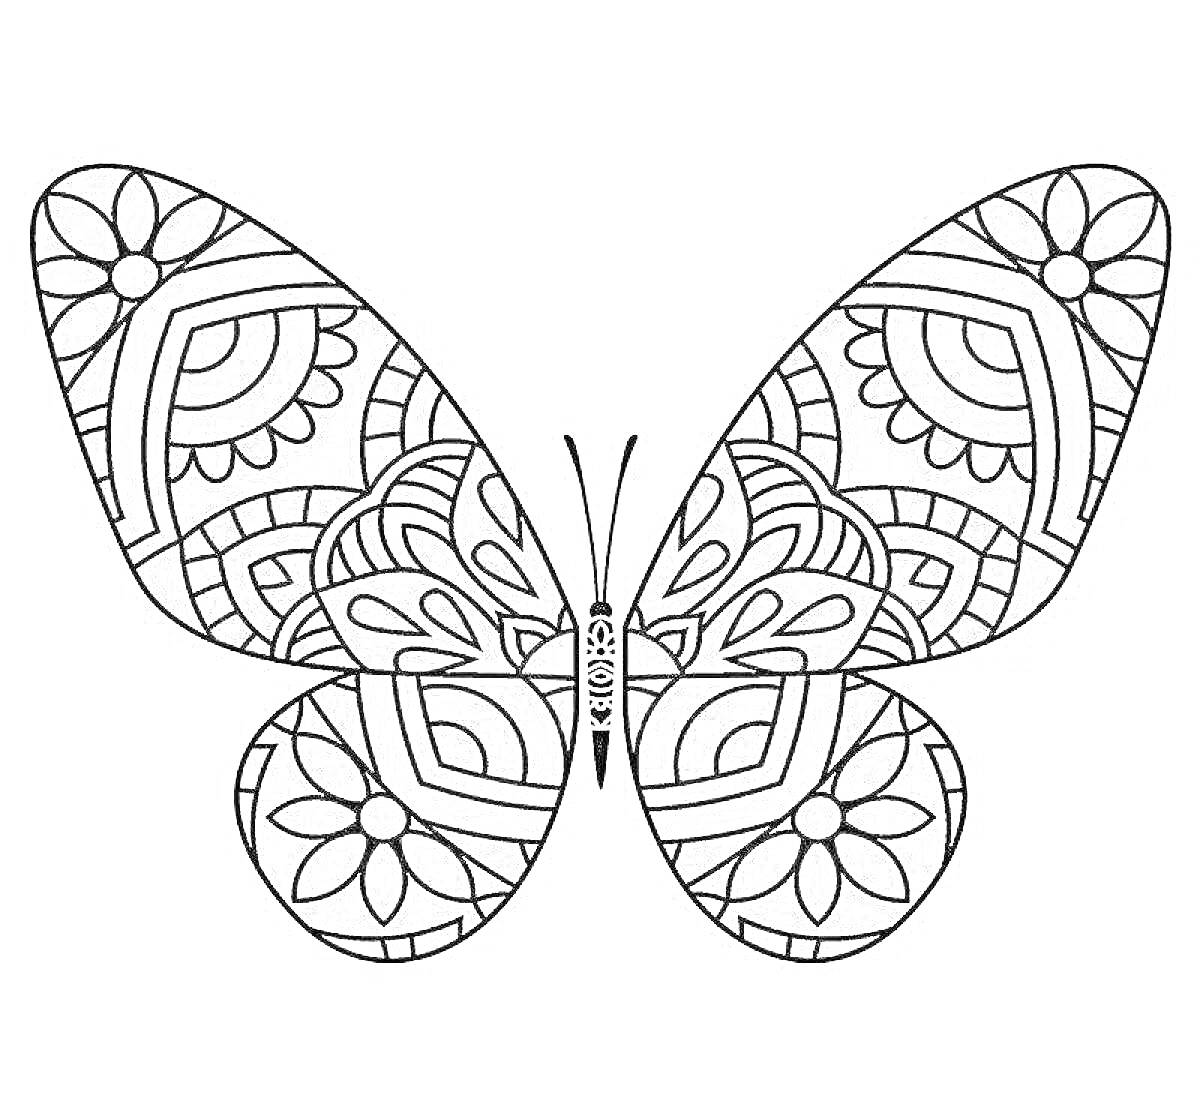 Раскраска Раскраска по номерам бабочка с узорами из цветов и геометрических фигур